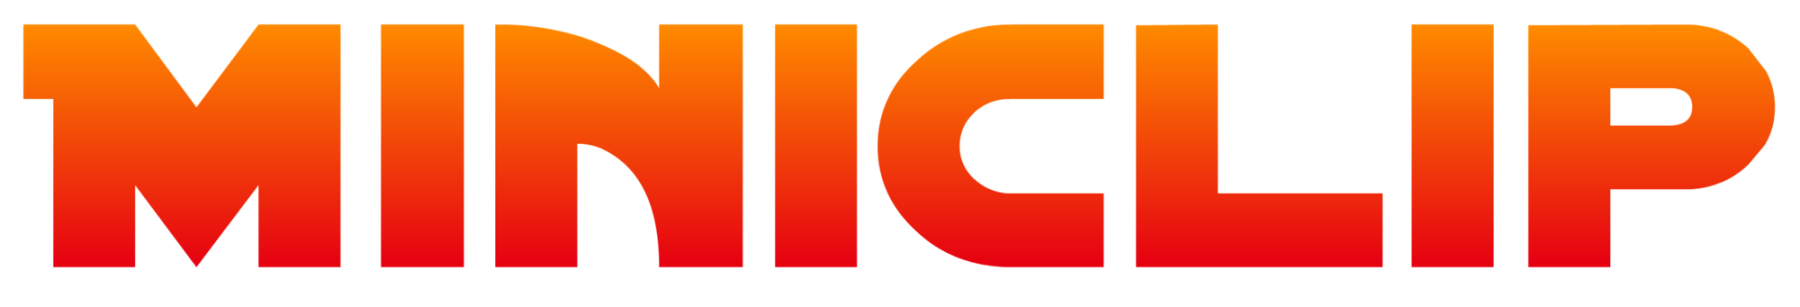 Miniclip_Logo